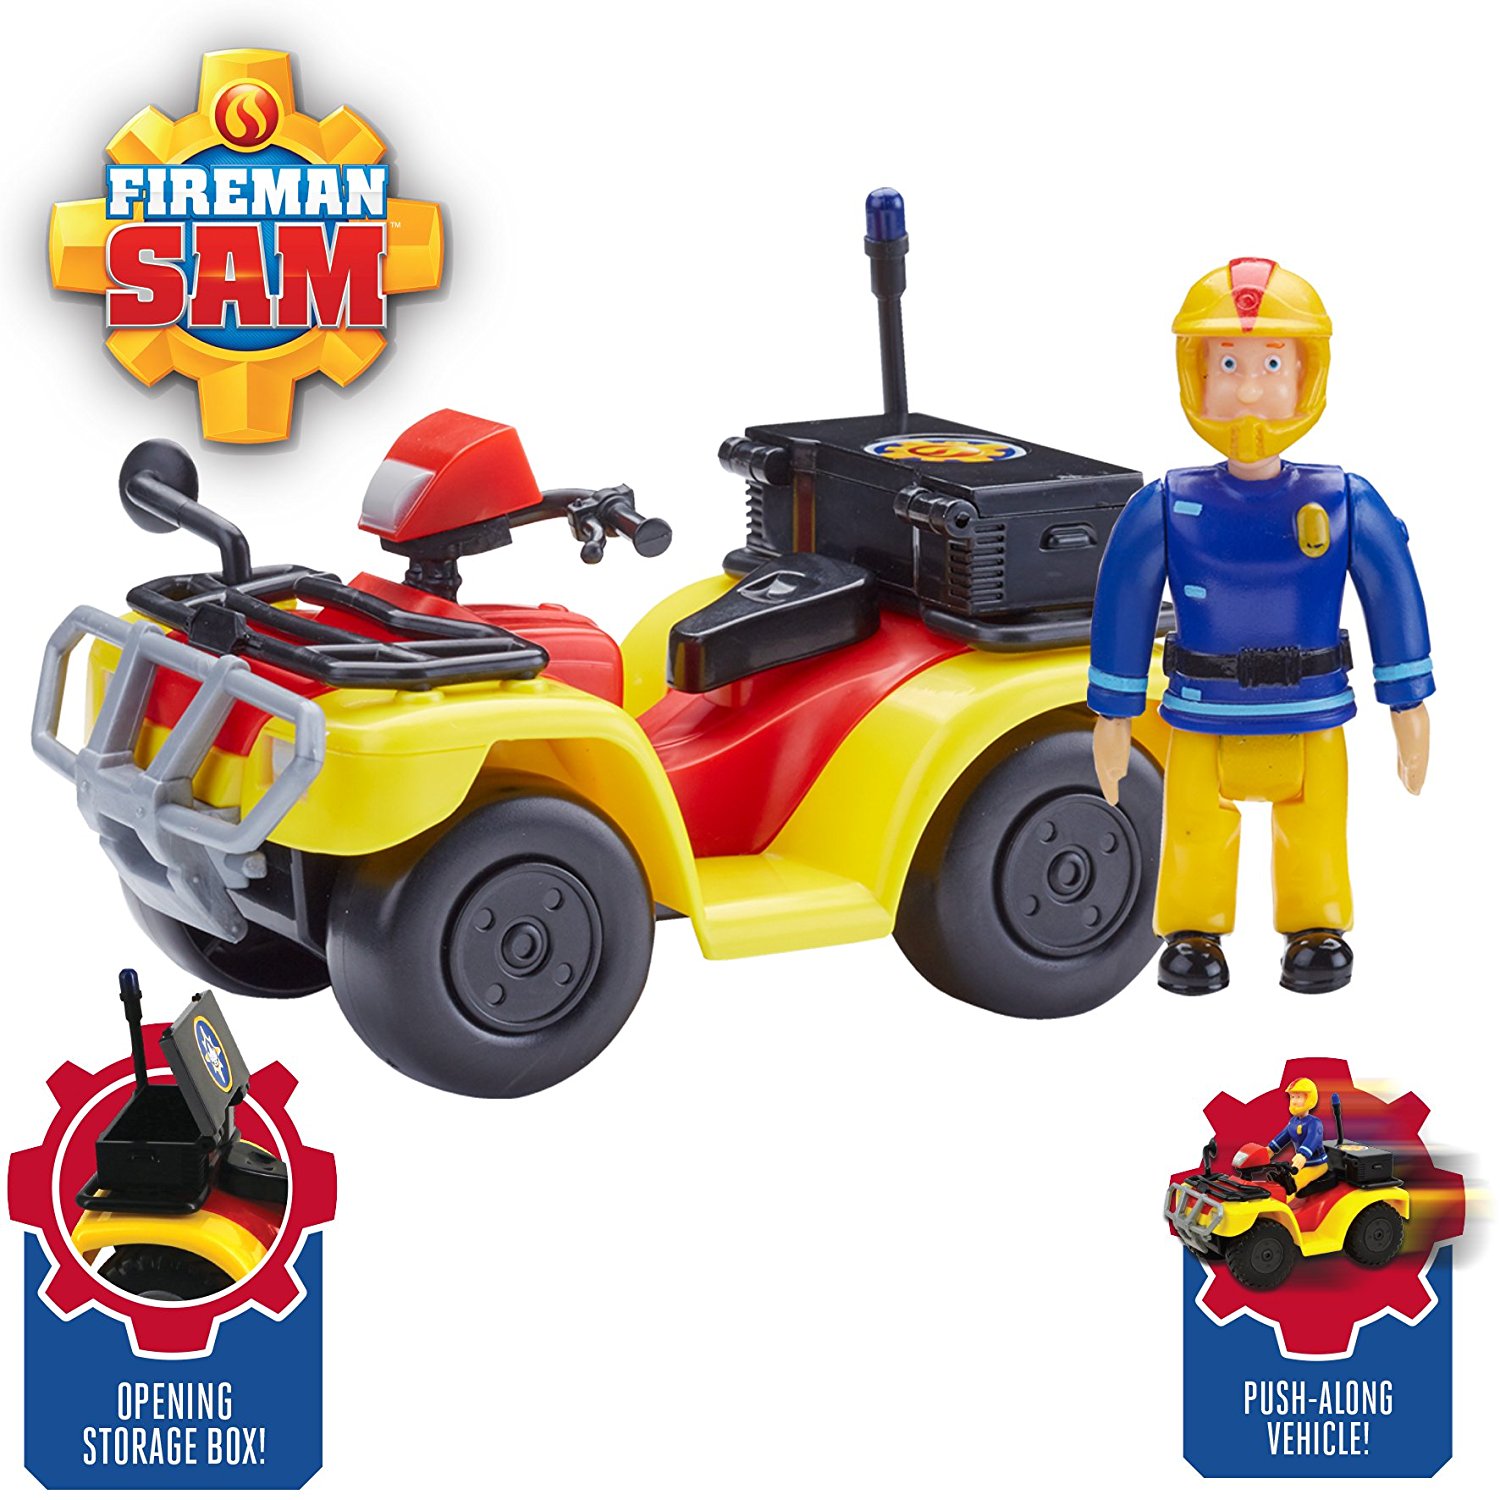 Amazon.com: Fireman Sam Quad Bike: Toys & Games